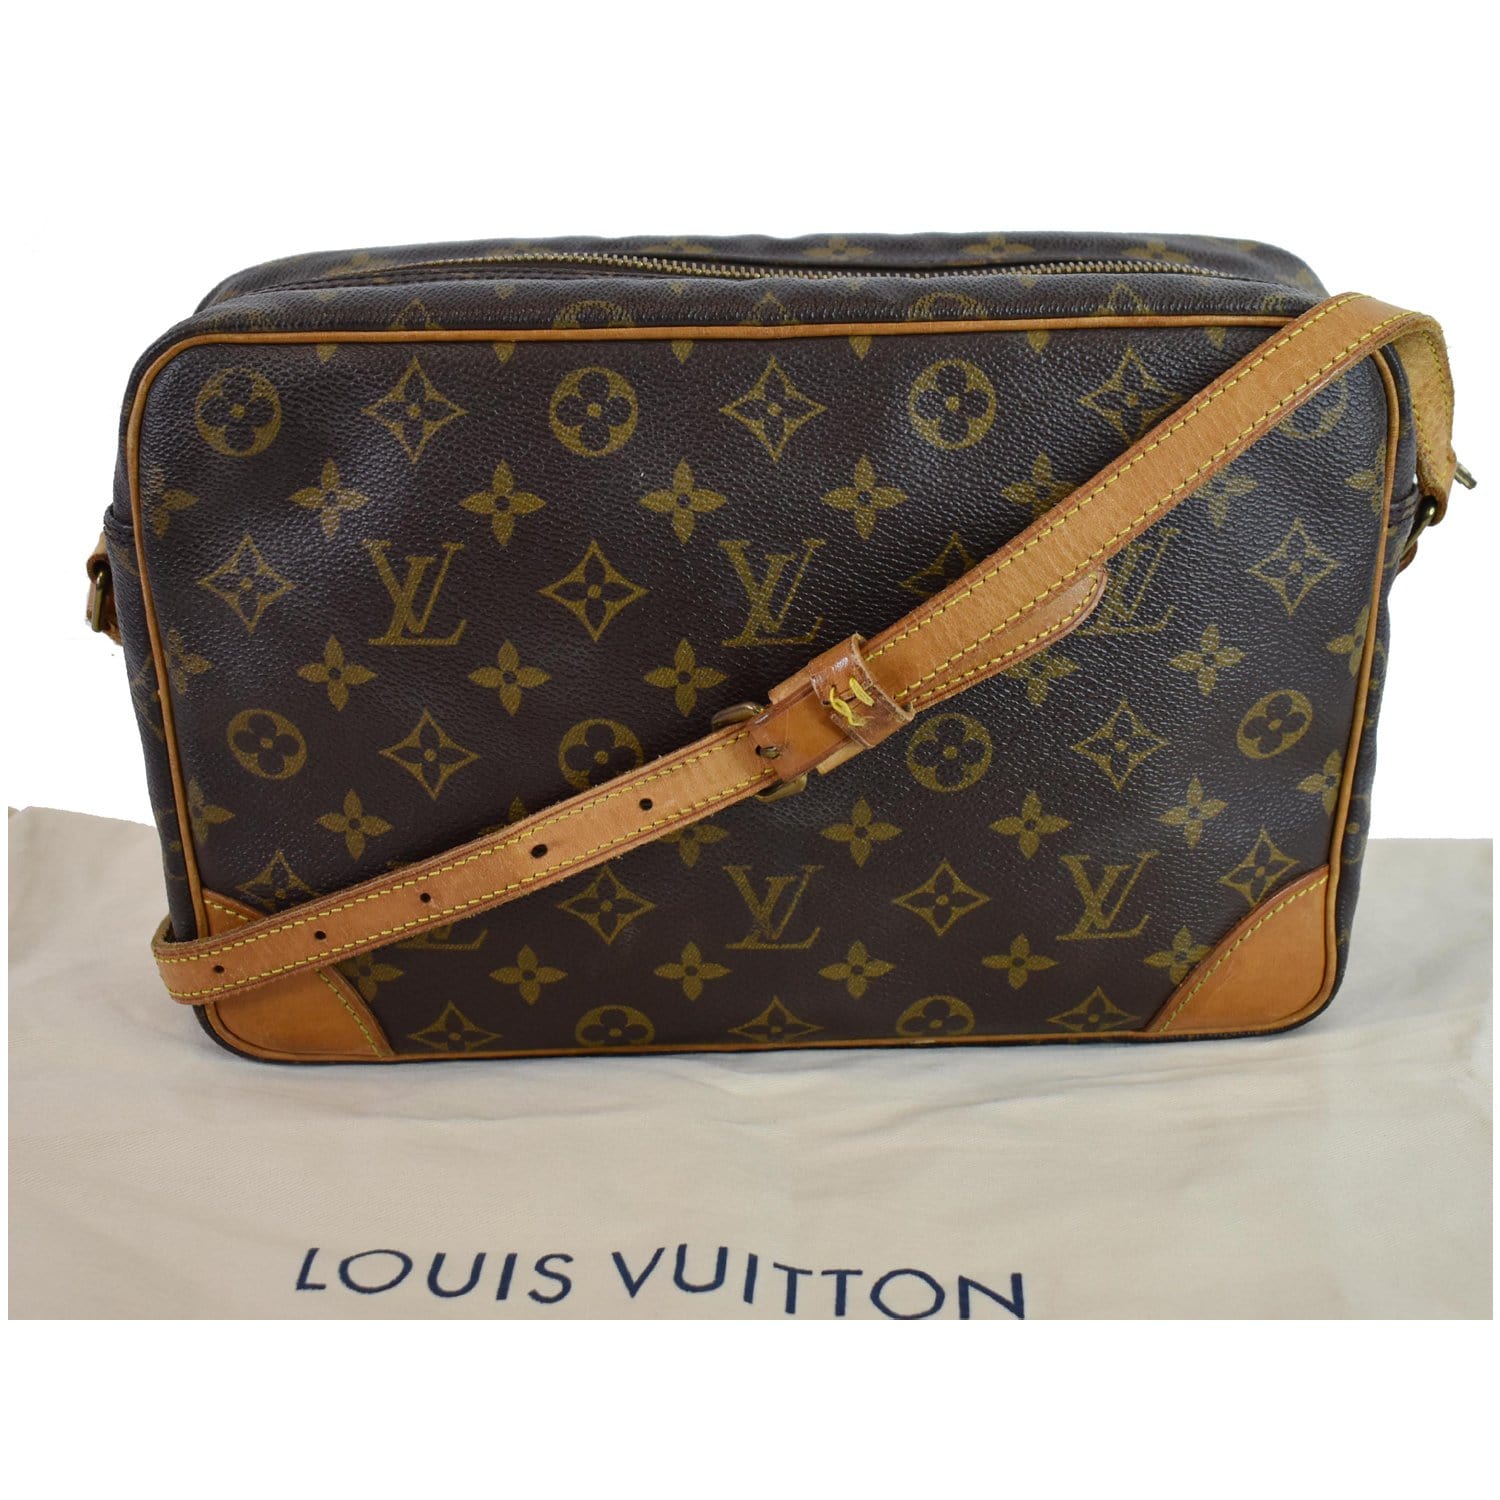 ❤️SOLD ❤️Louis Vuitton Trocadero 23 Crossbody Bag